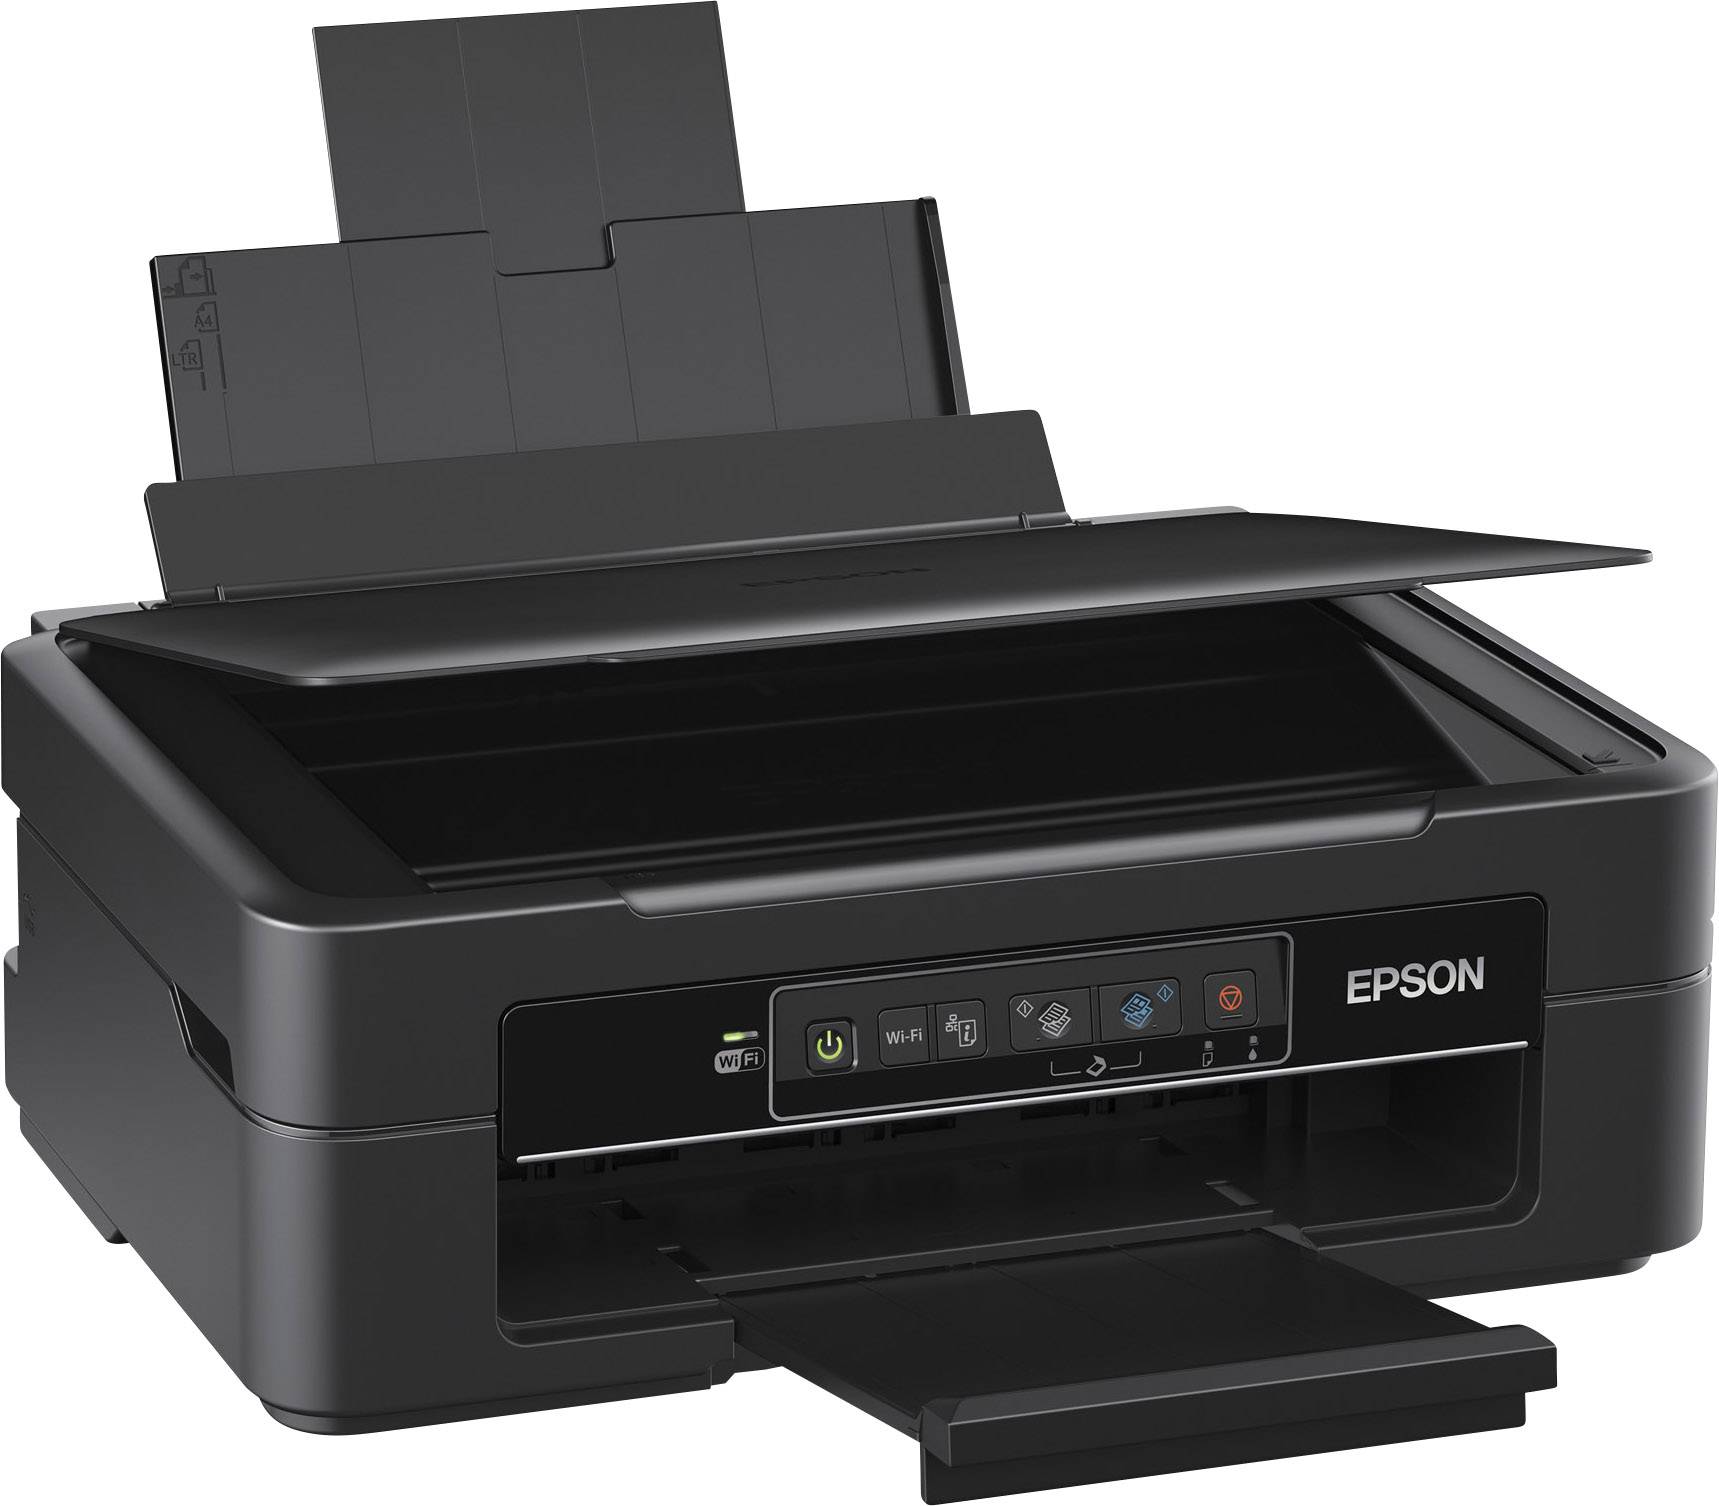 Multifunction laser printers for home - wishtide